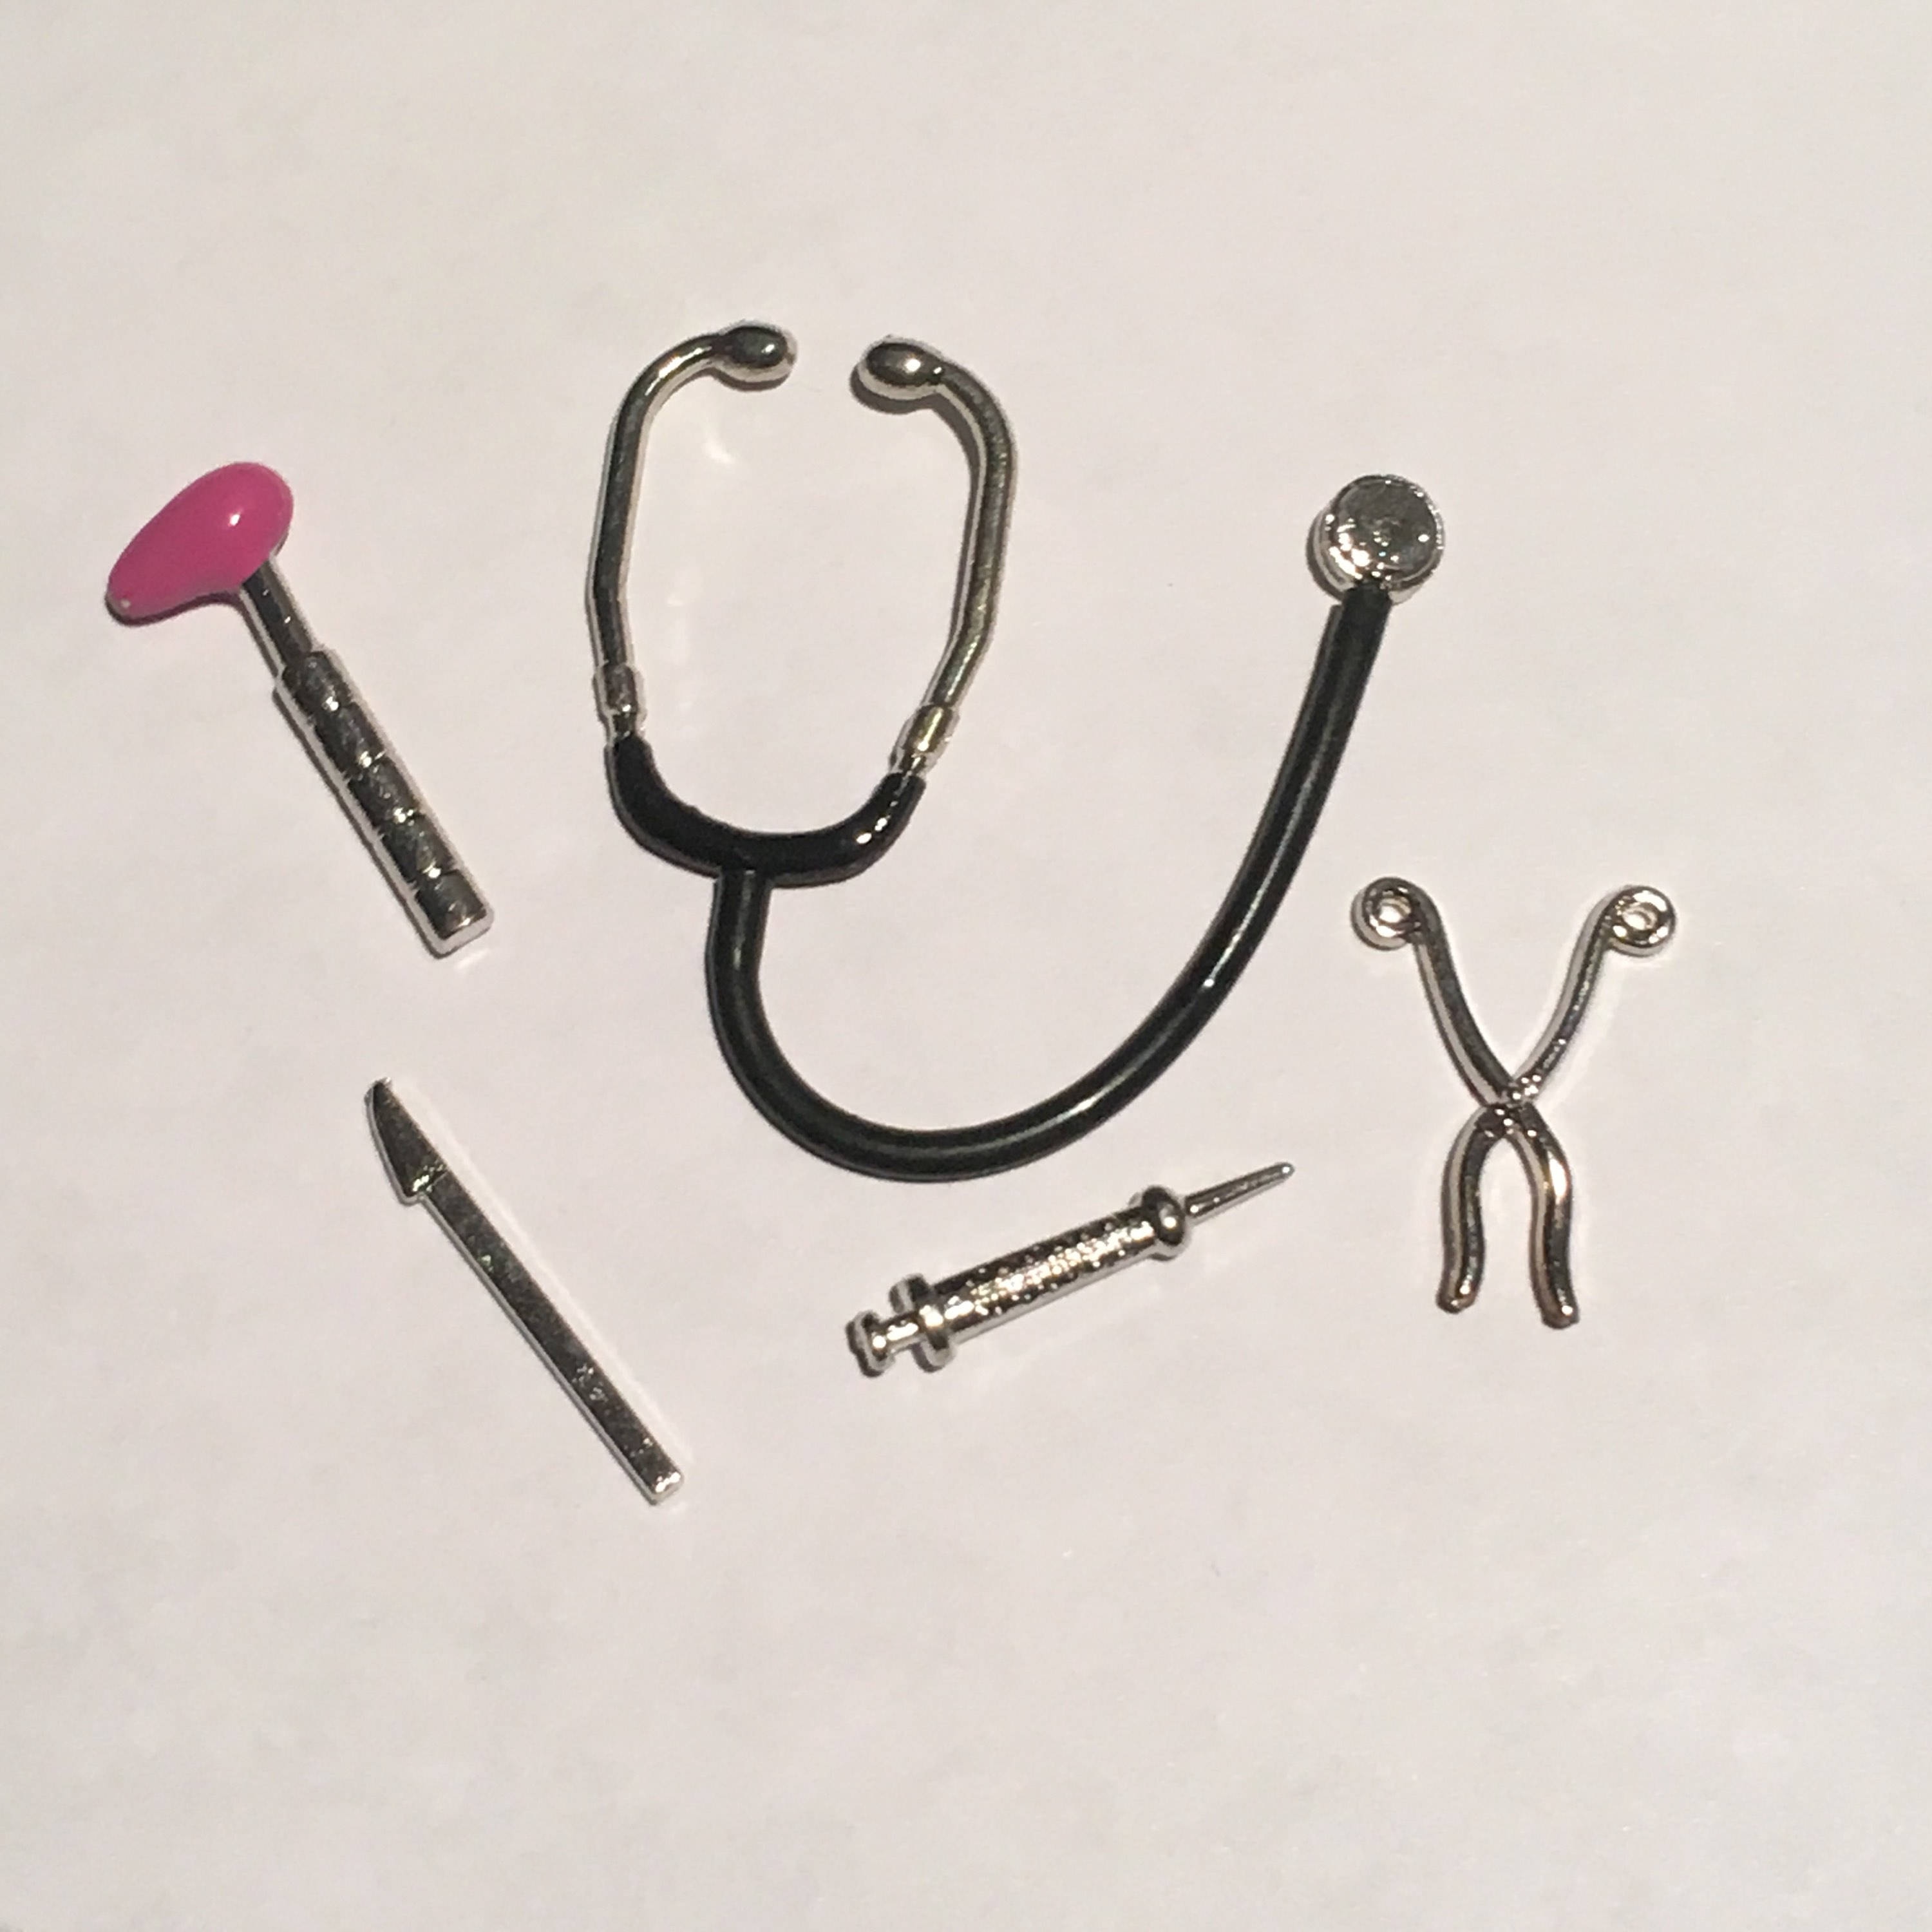 Metall Miniatur 1:12 Puppenhaus Stethoskop 